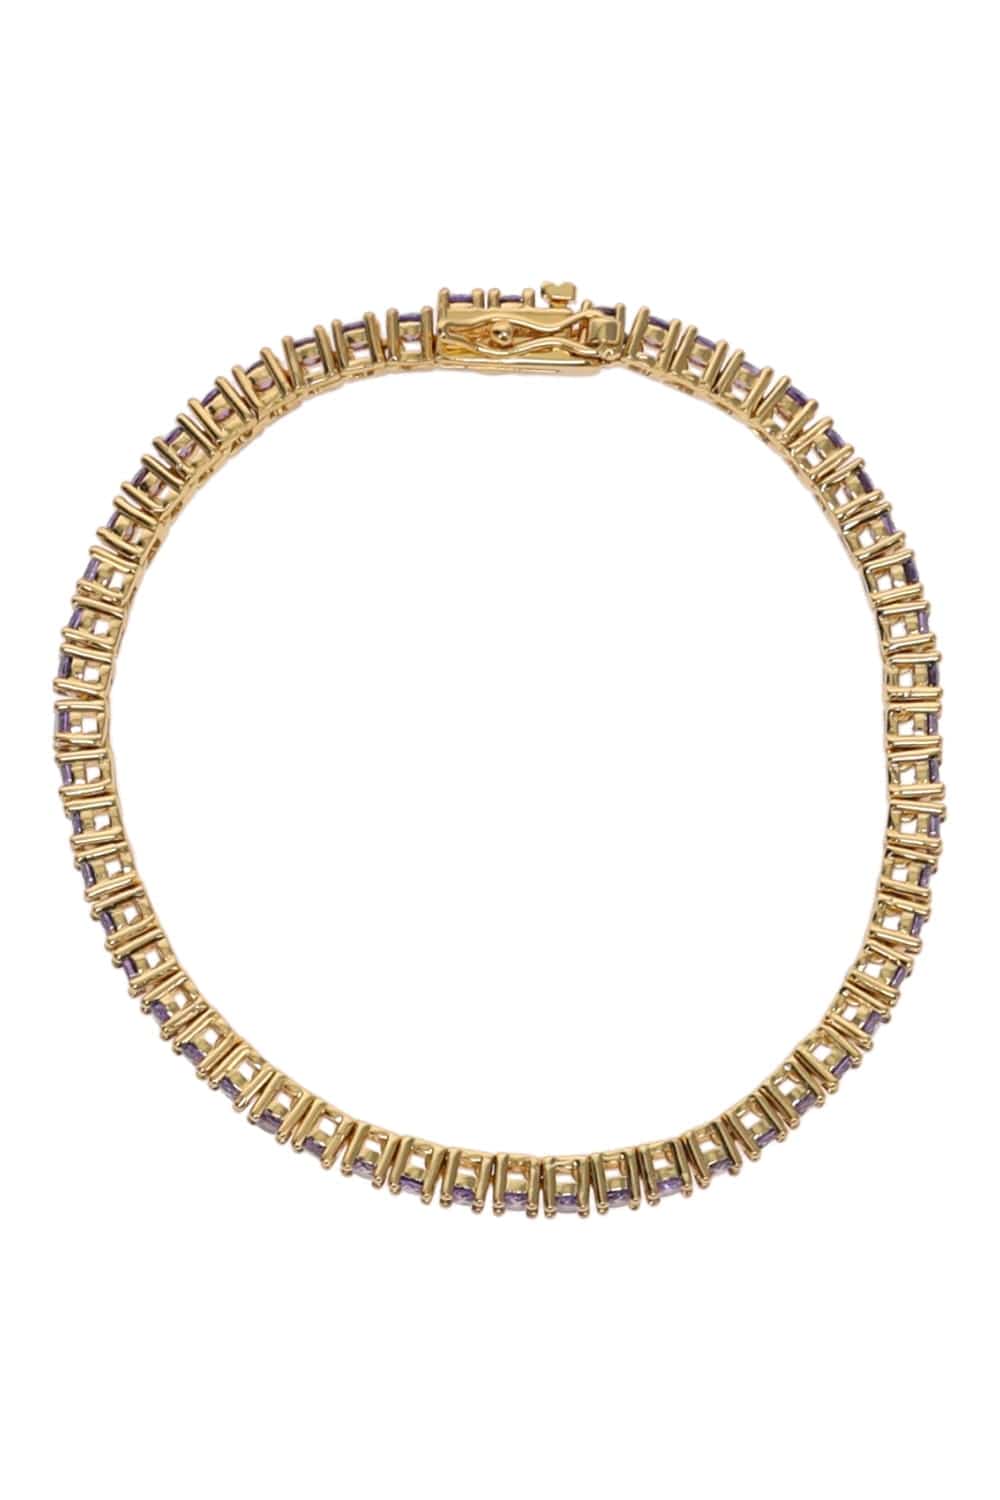 Crystal Haze Jewelry Serena Lavender Crystal Tennis Bracelet